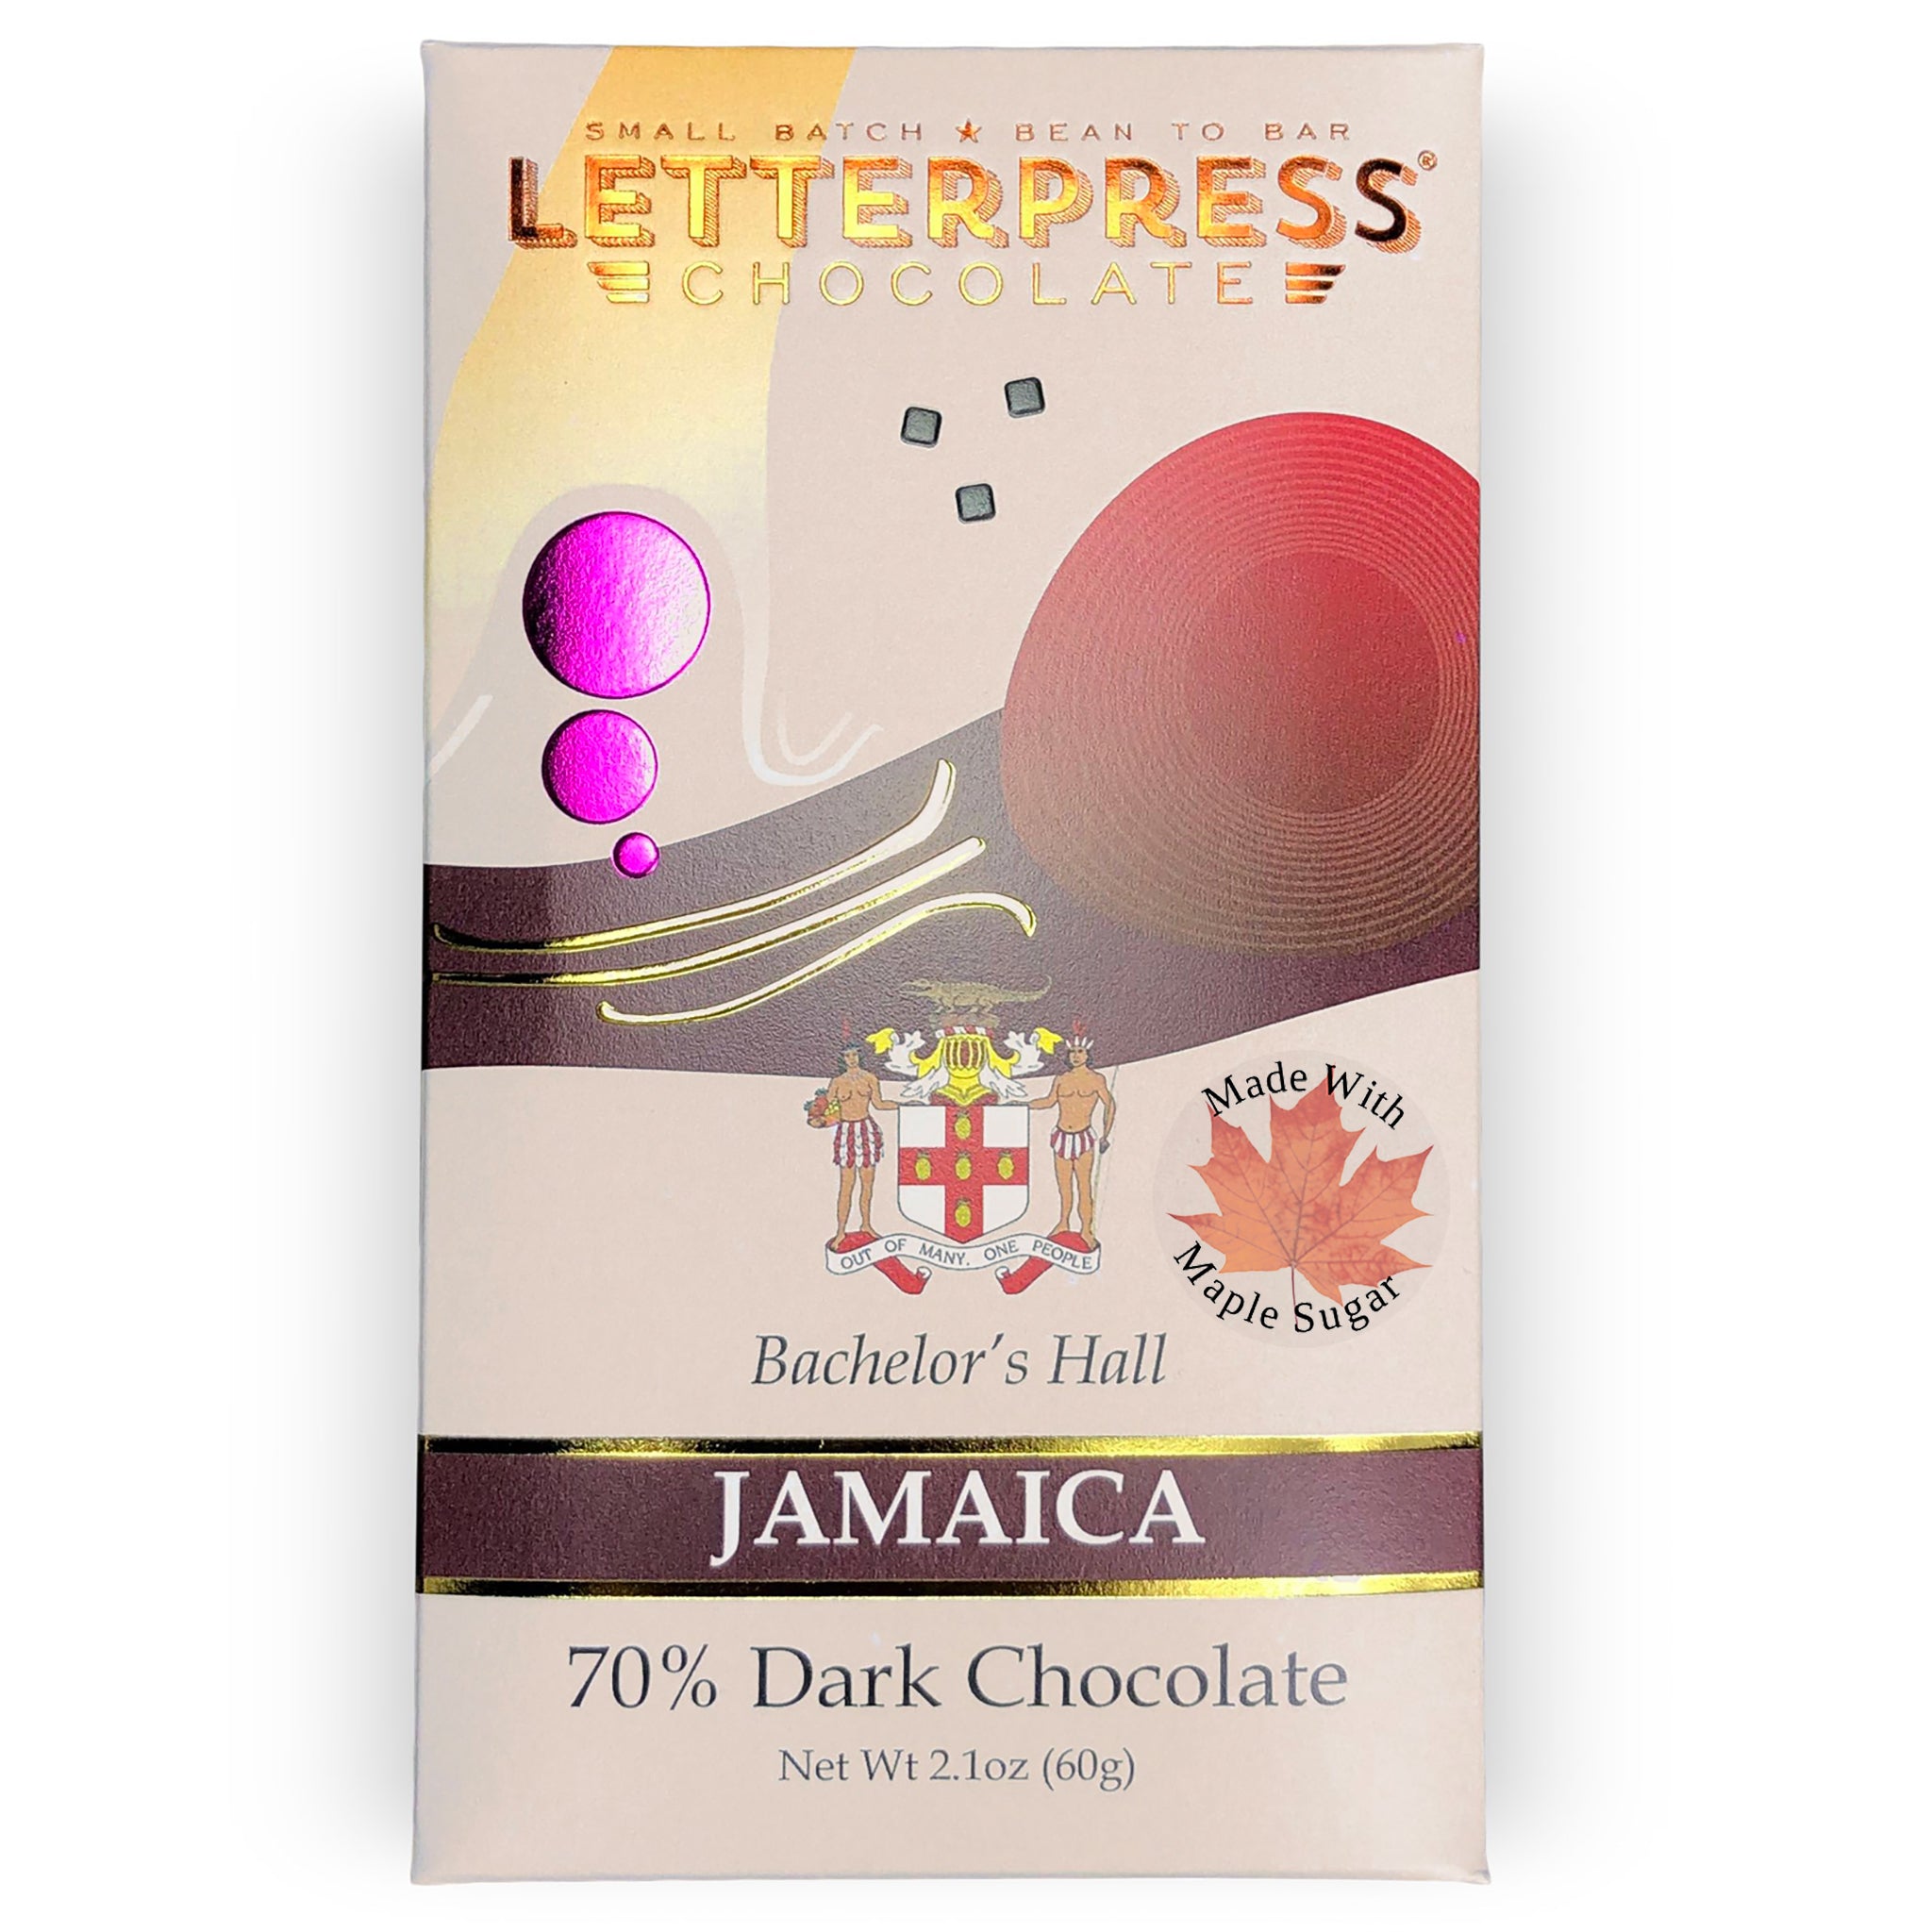 Photo of Jamaica 70% Dark Chocolate with Maple Sugar packaging